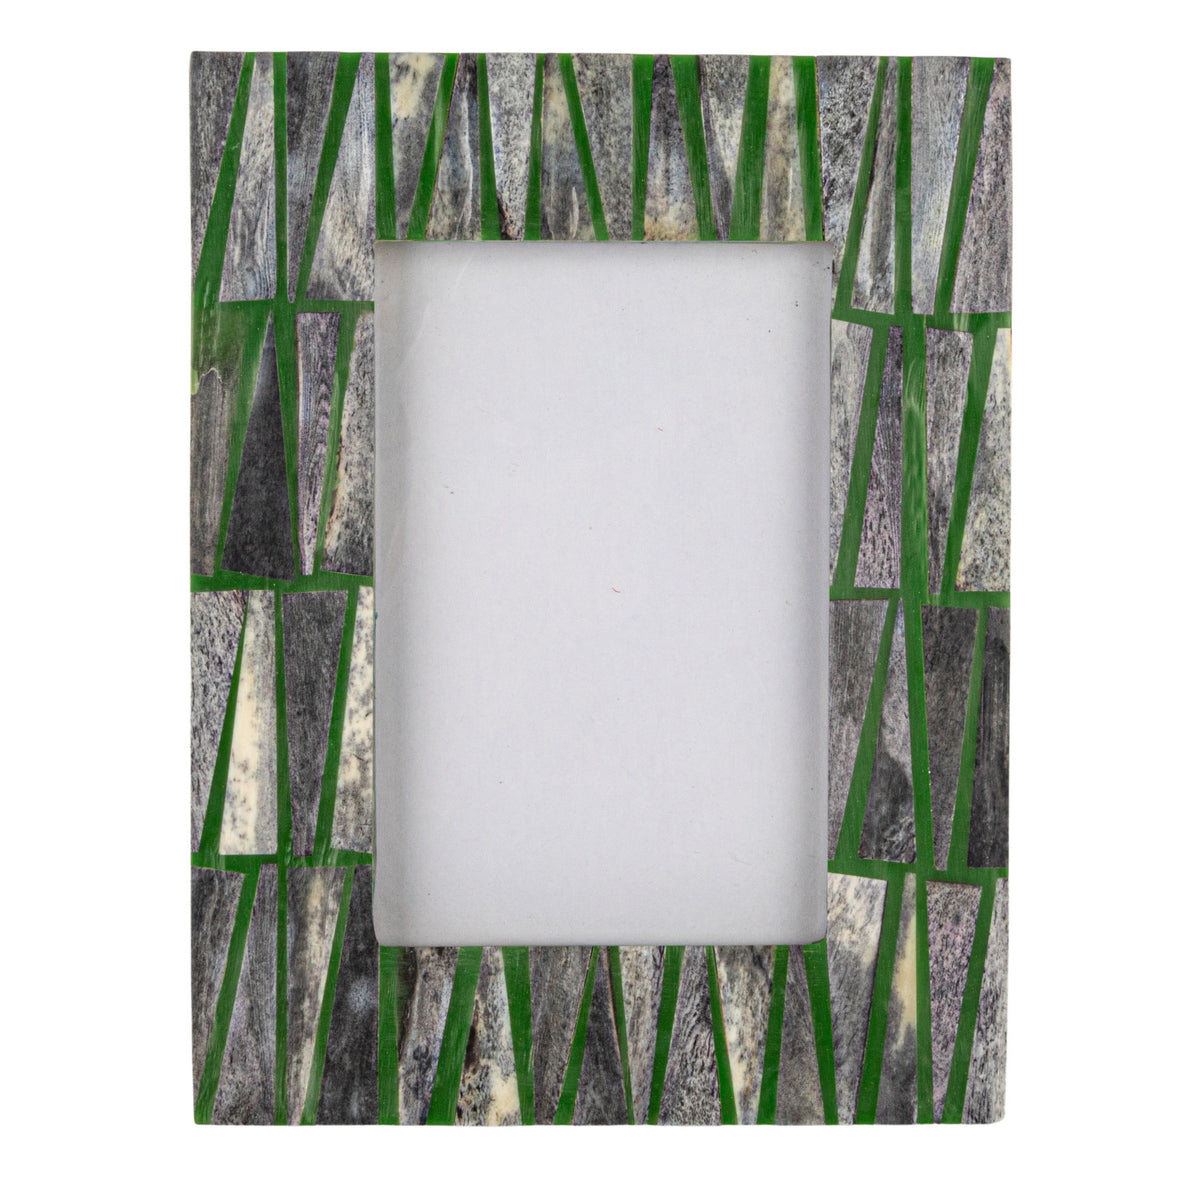 Mosaic Photo Frame w/Patter Green & White